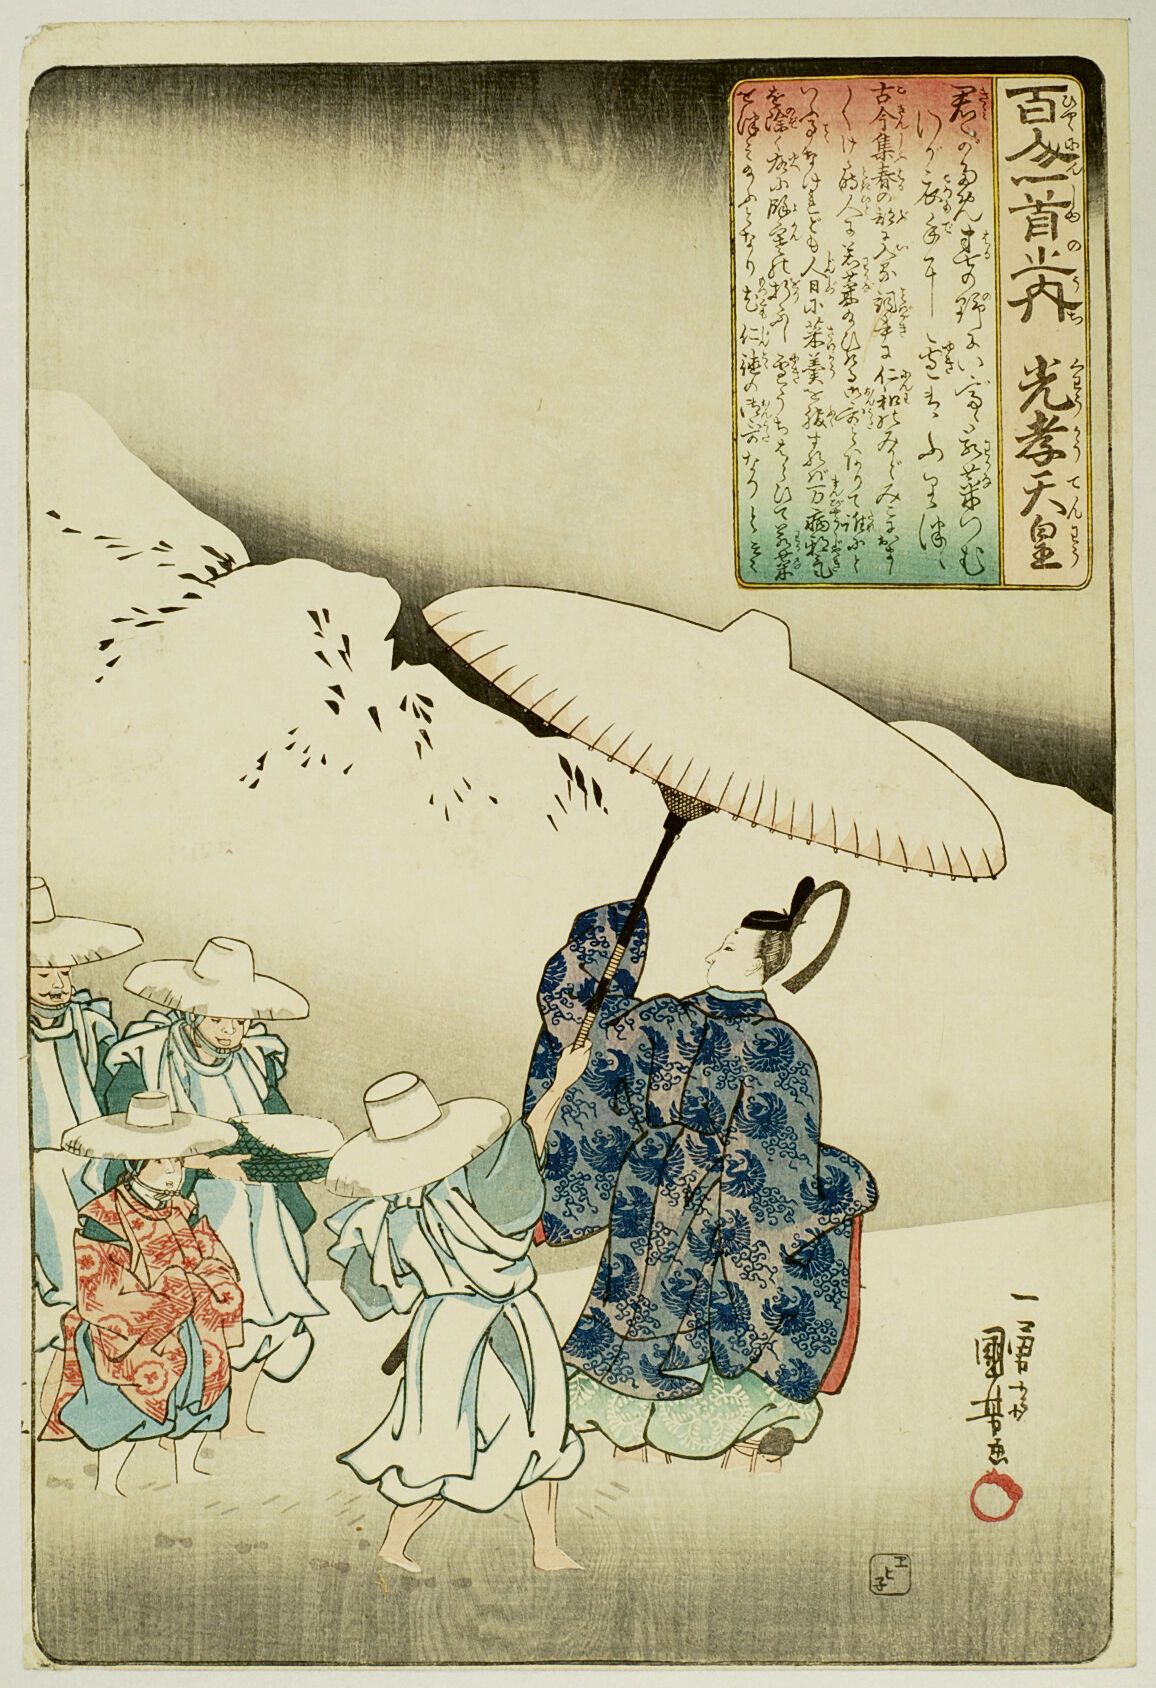 Null 宇都宫国吉 (1797-1861)
百人一首》系列中的 "大板"（Oban tate-e），板块为 "Koko Tenno"（天皇和他的侍从在雪中行走&hellip;